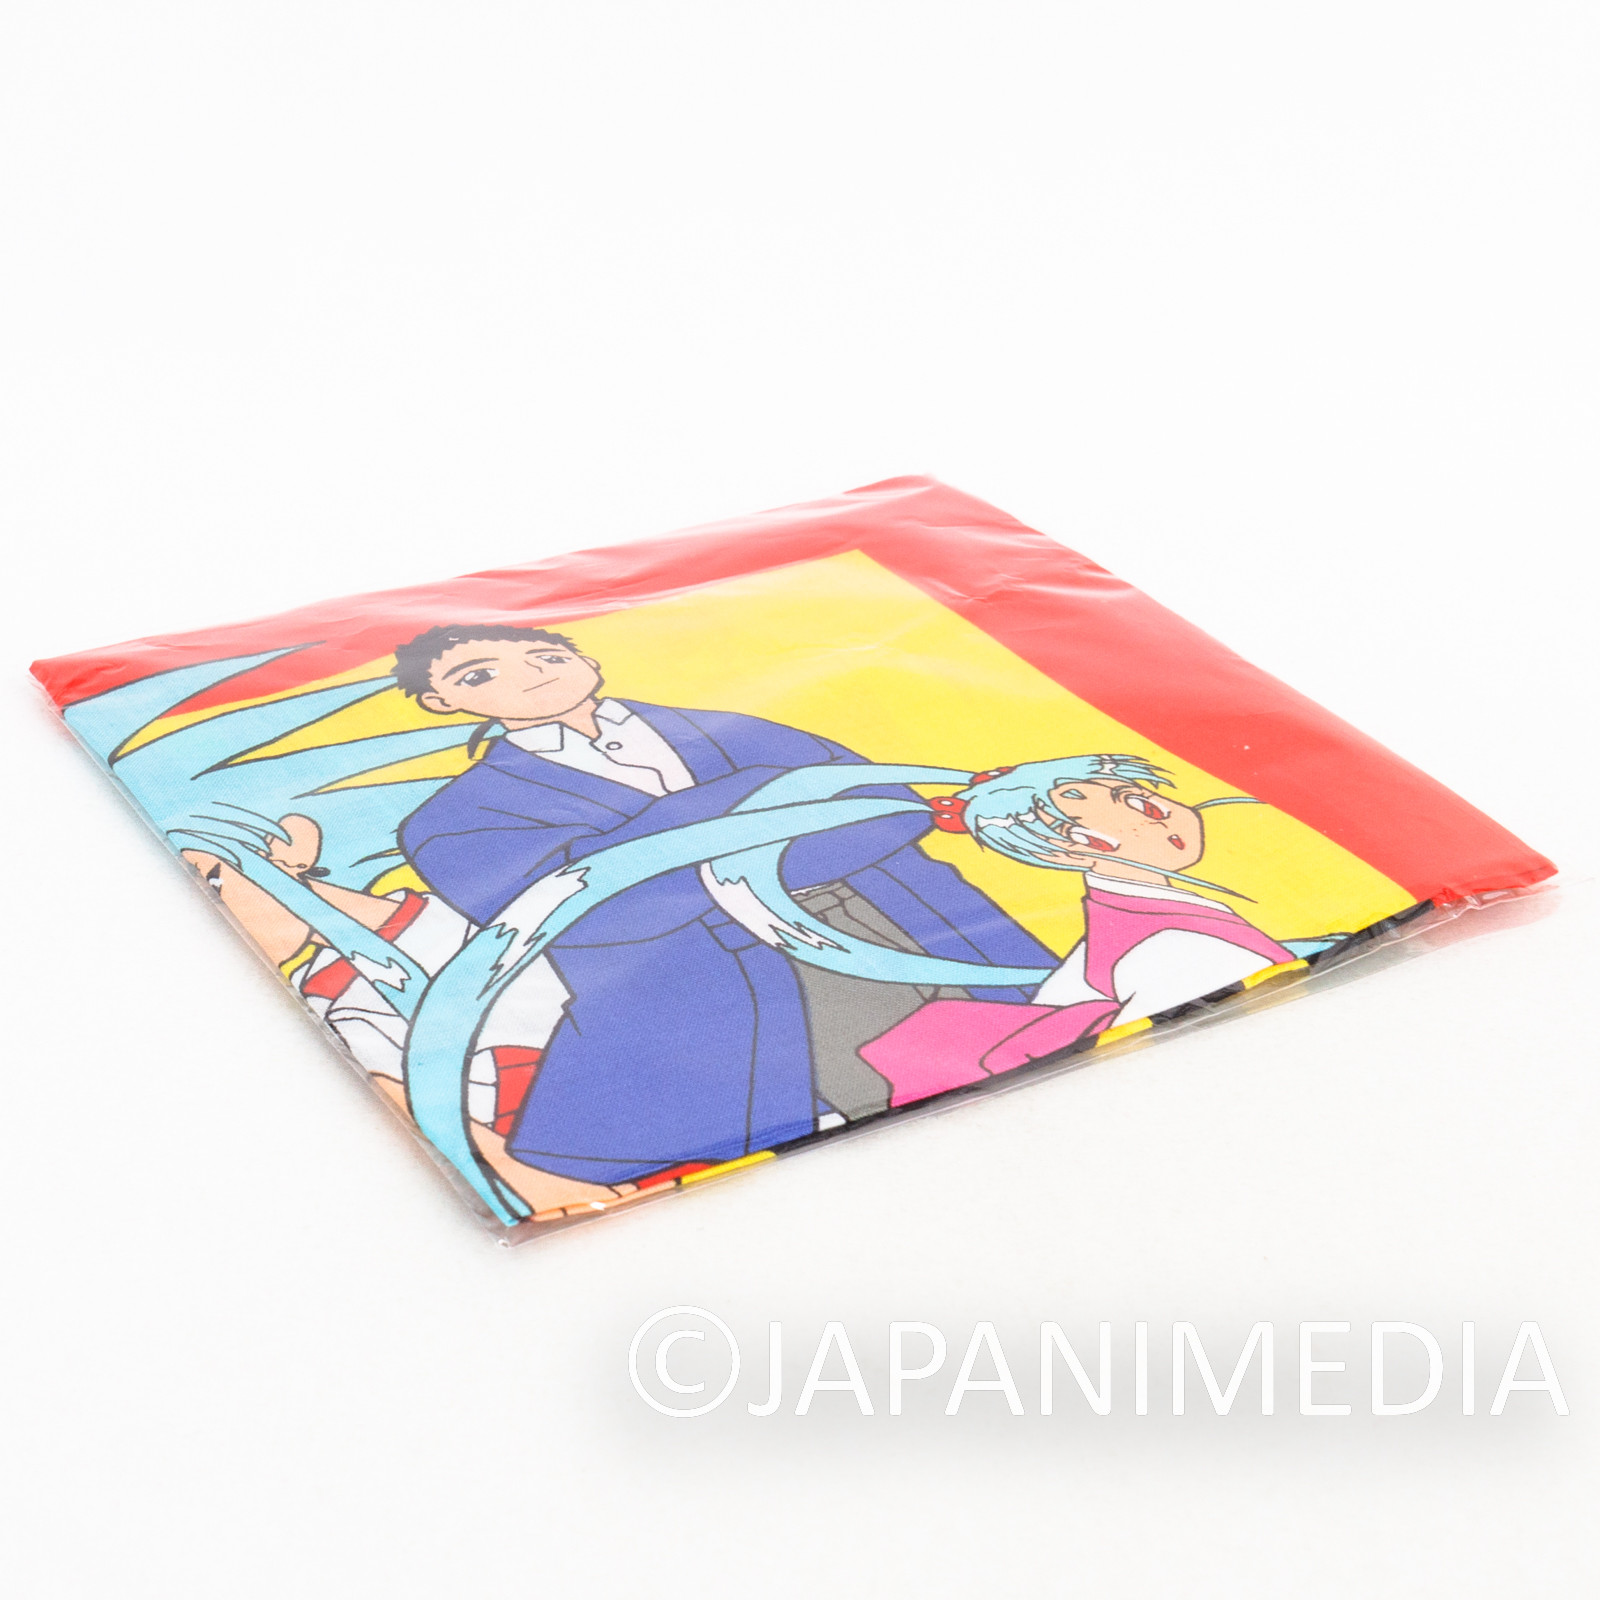 Tenchi Muyo Ryo-oh-ki Ryoko Sasami Handkerchief 12x12 inch